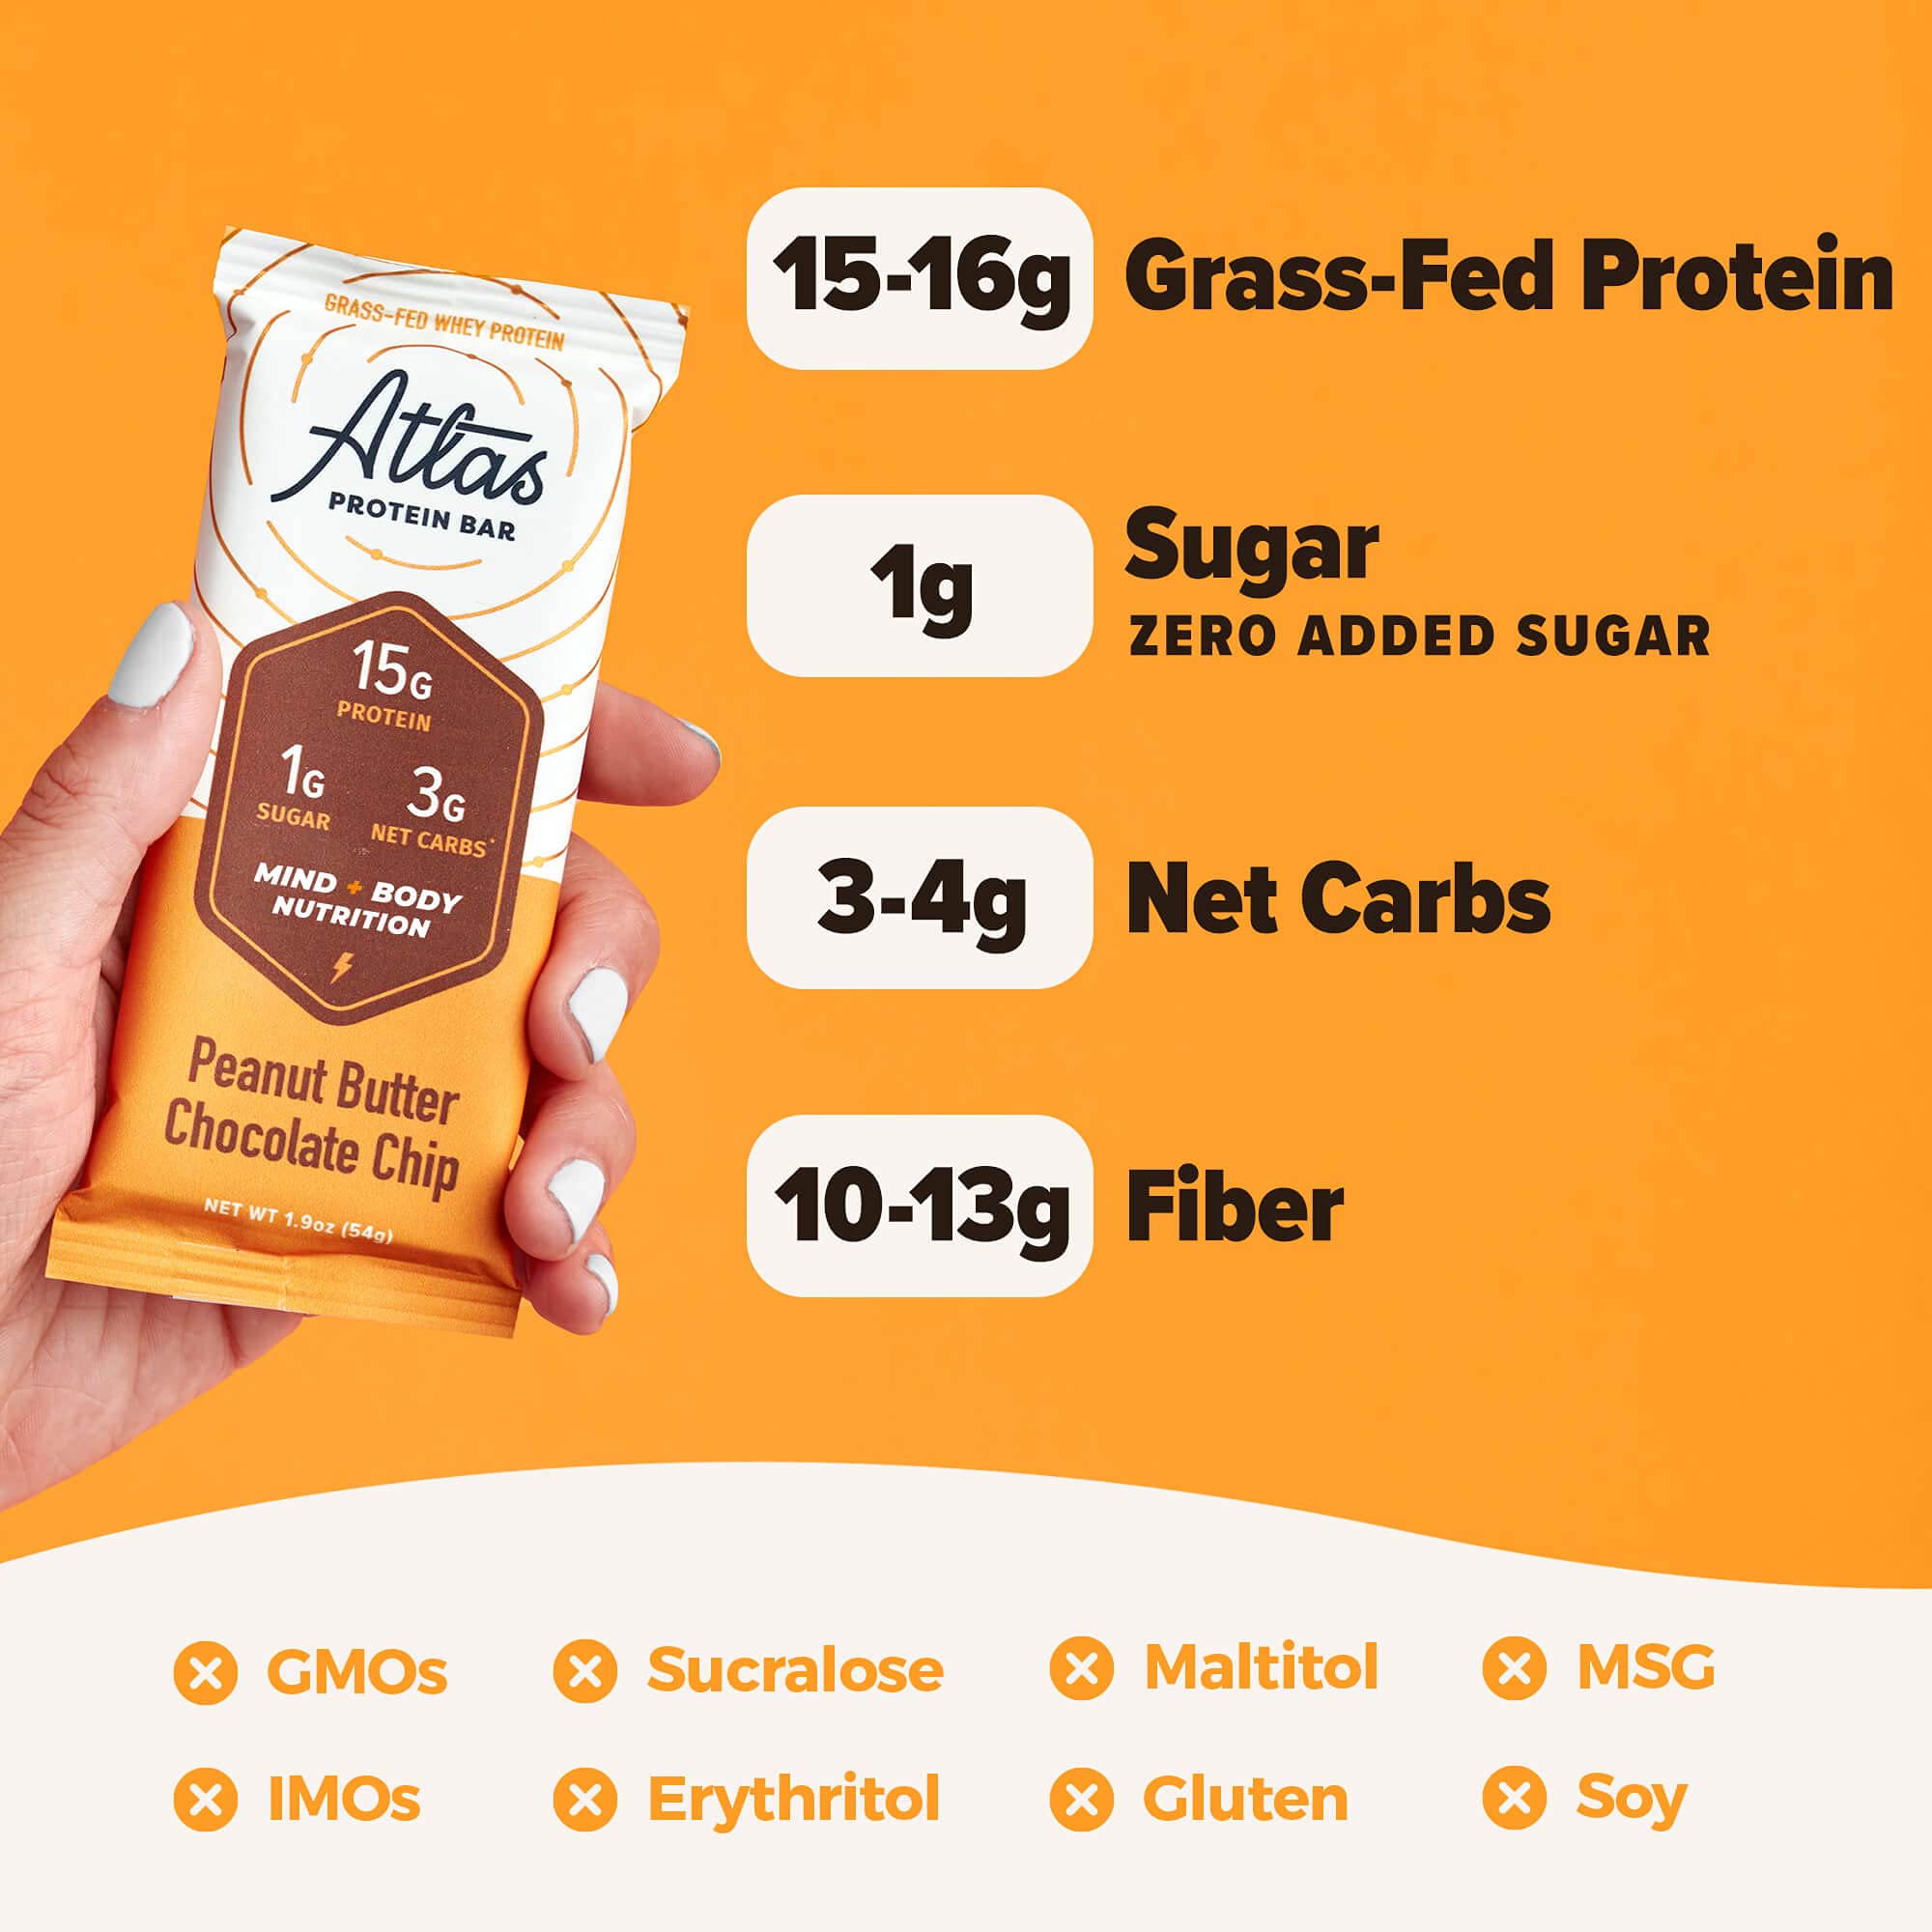 Atlas Protein Bar, 15g Protein, 1g Sugar, Clean Ingredients, Gluten Free, Value Pack (30 Count, 6 Flavors)